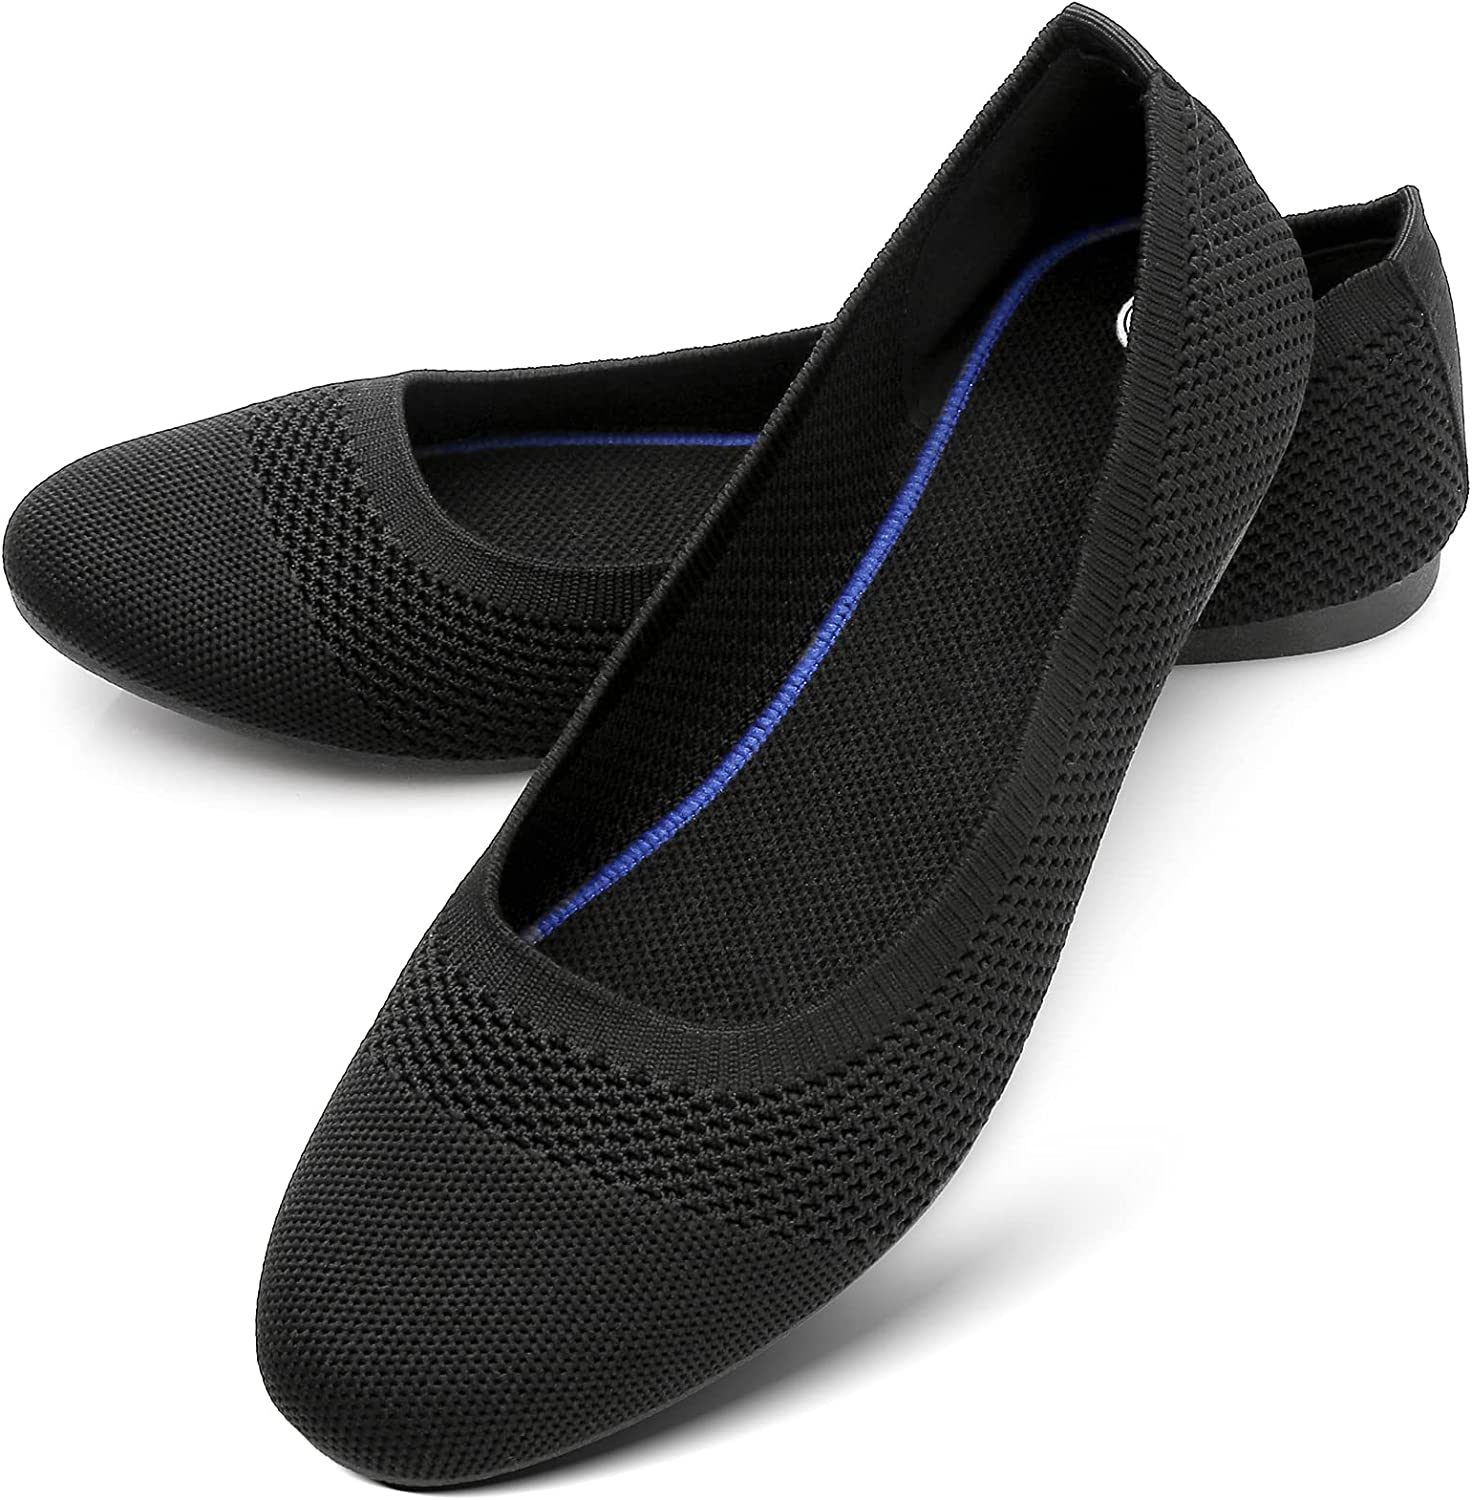 Rominz Women's Flats Shoes Round Toe Flats Black Flats Shoes Women